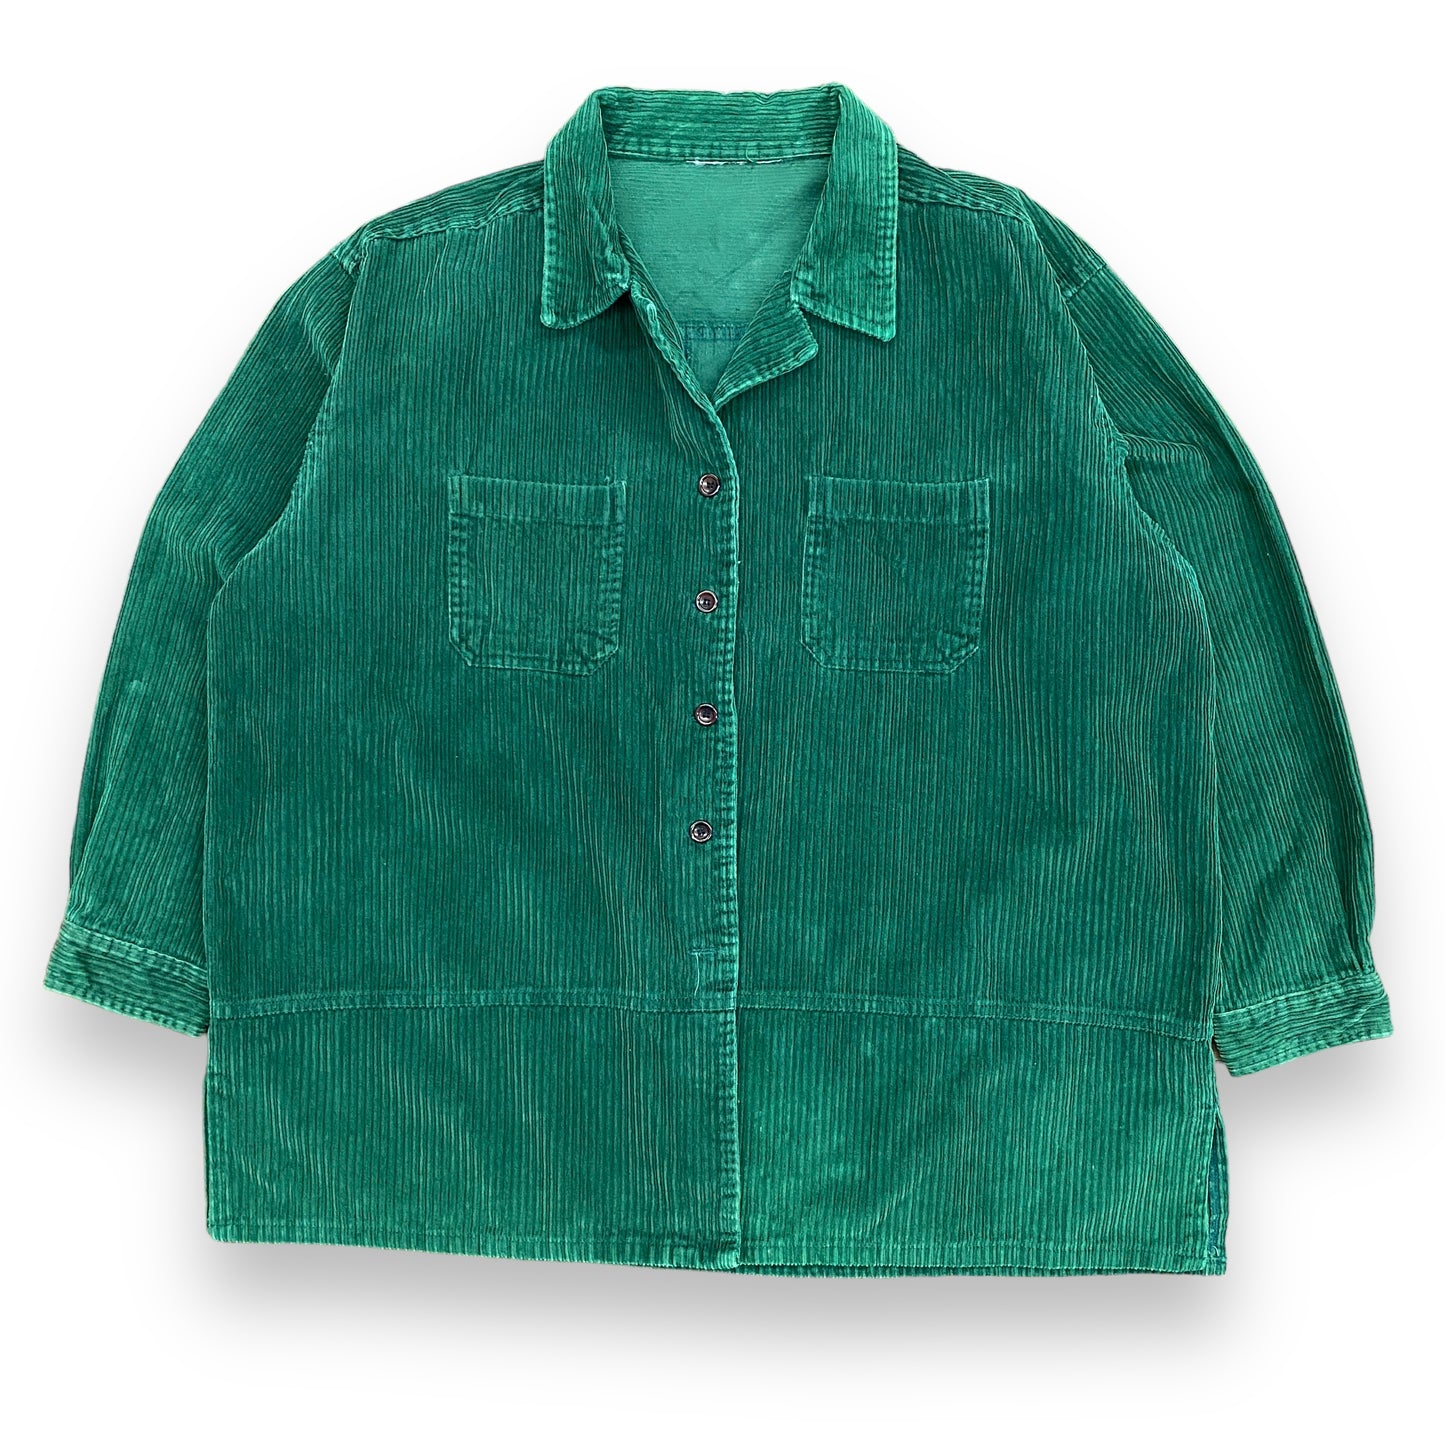 Vintage Green Corduroy Oversized Button Up - Size XL